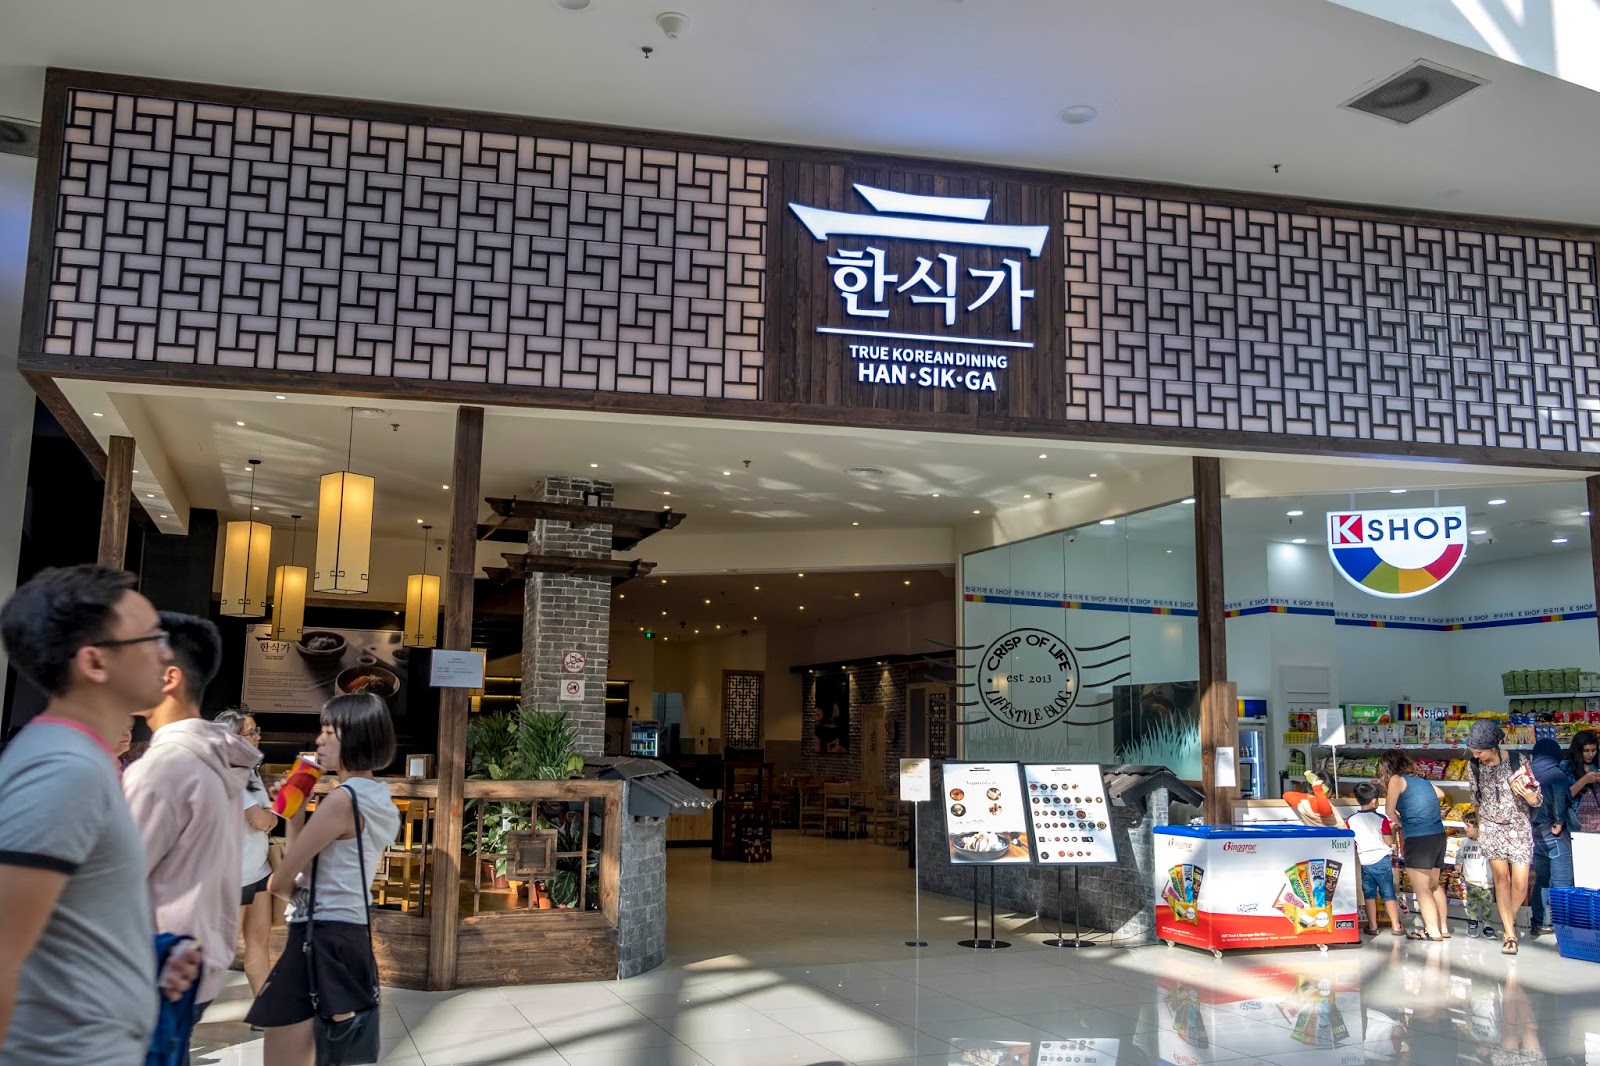 True Korean Dining - Han Sik Ga @ Gurney Plaza, Penang